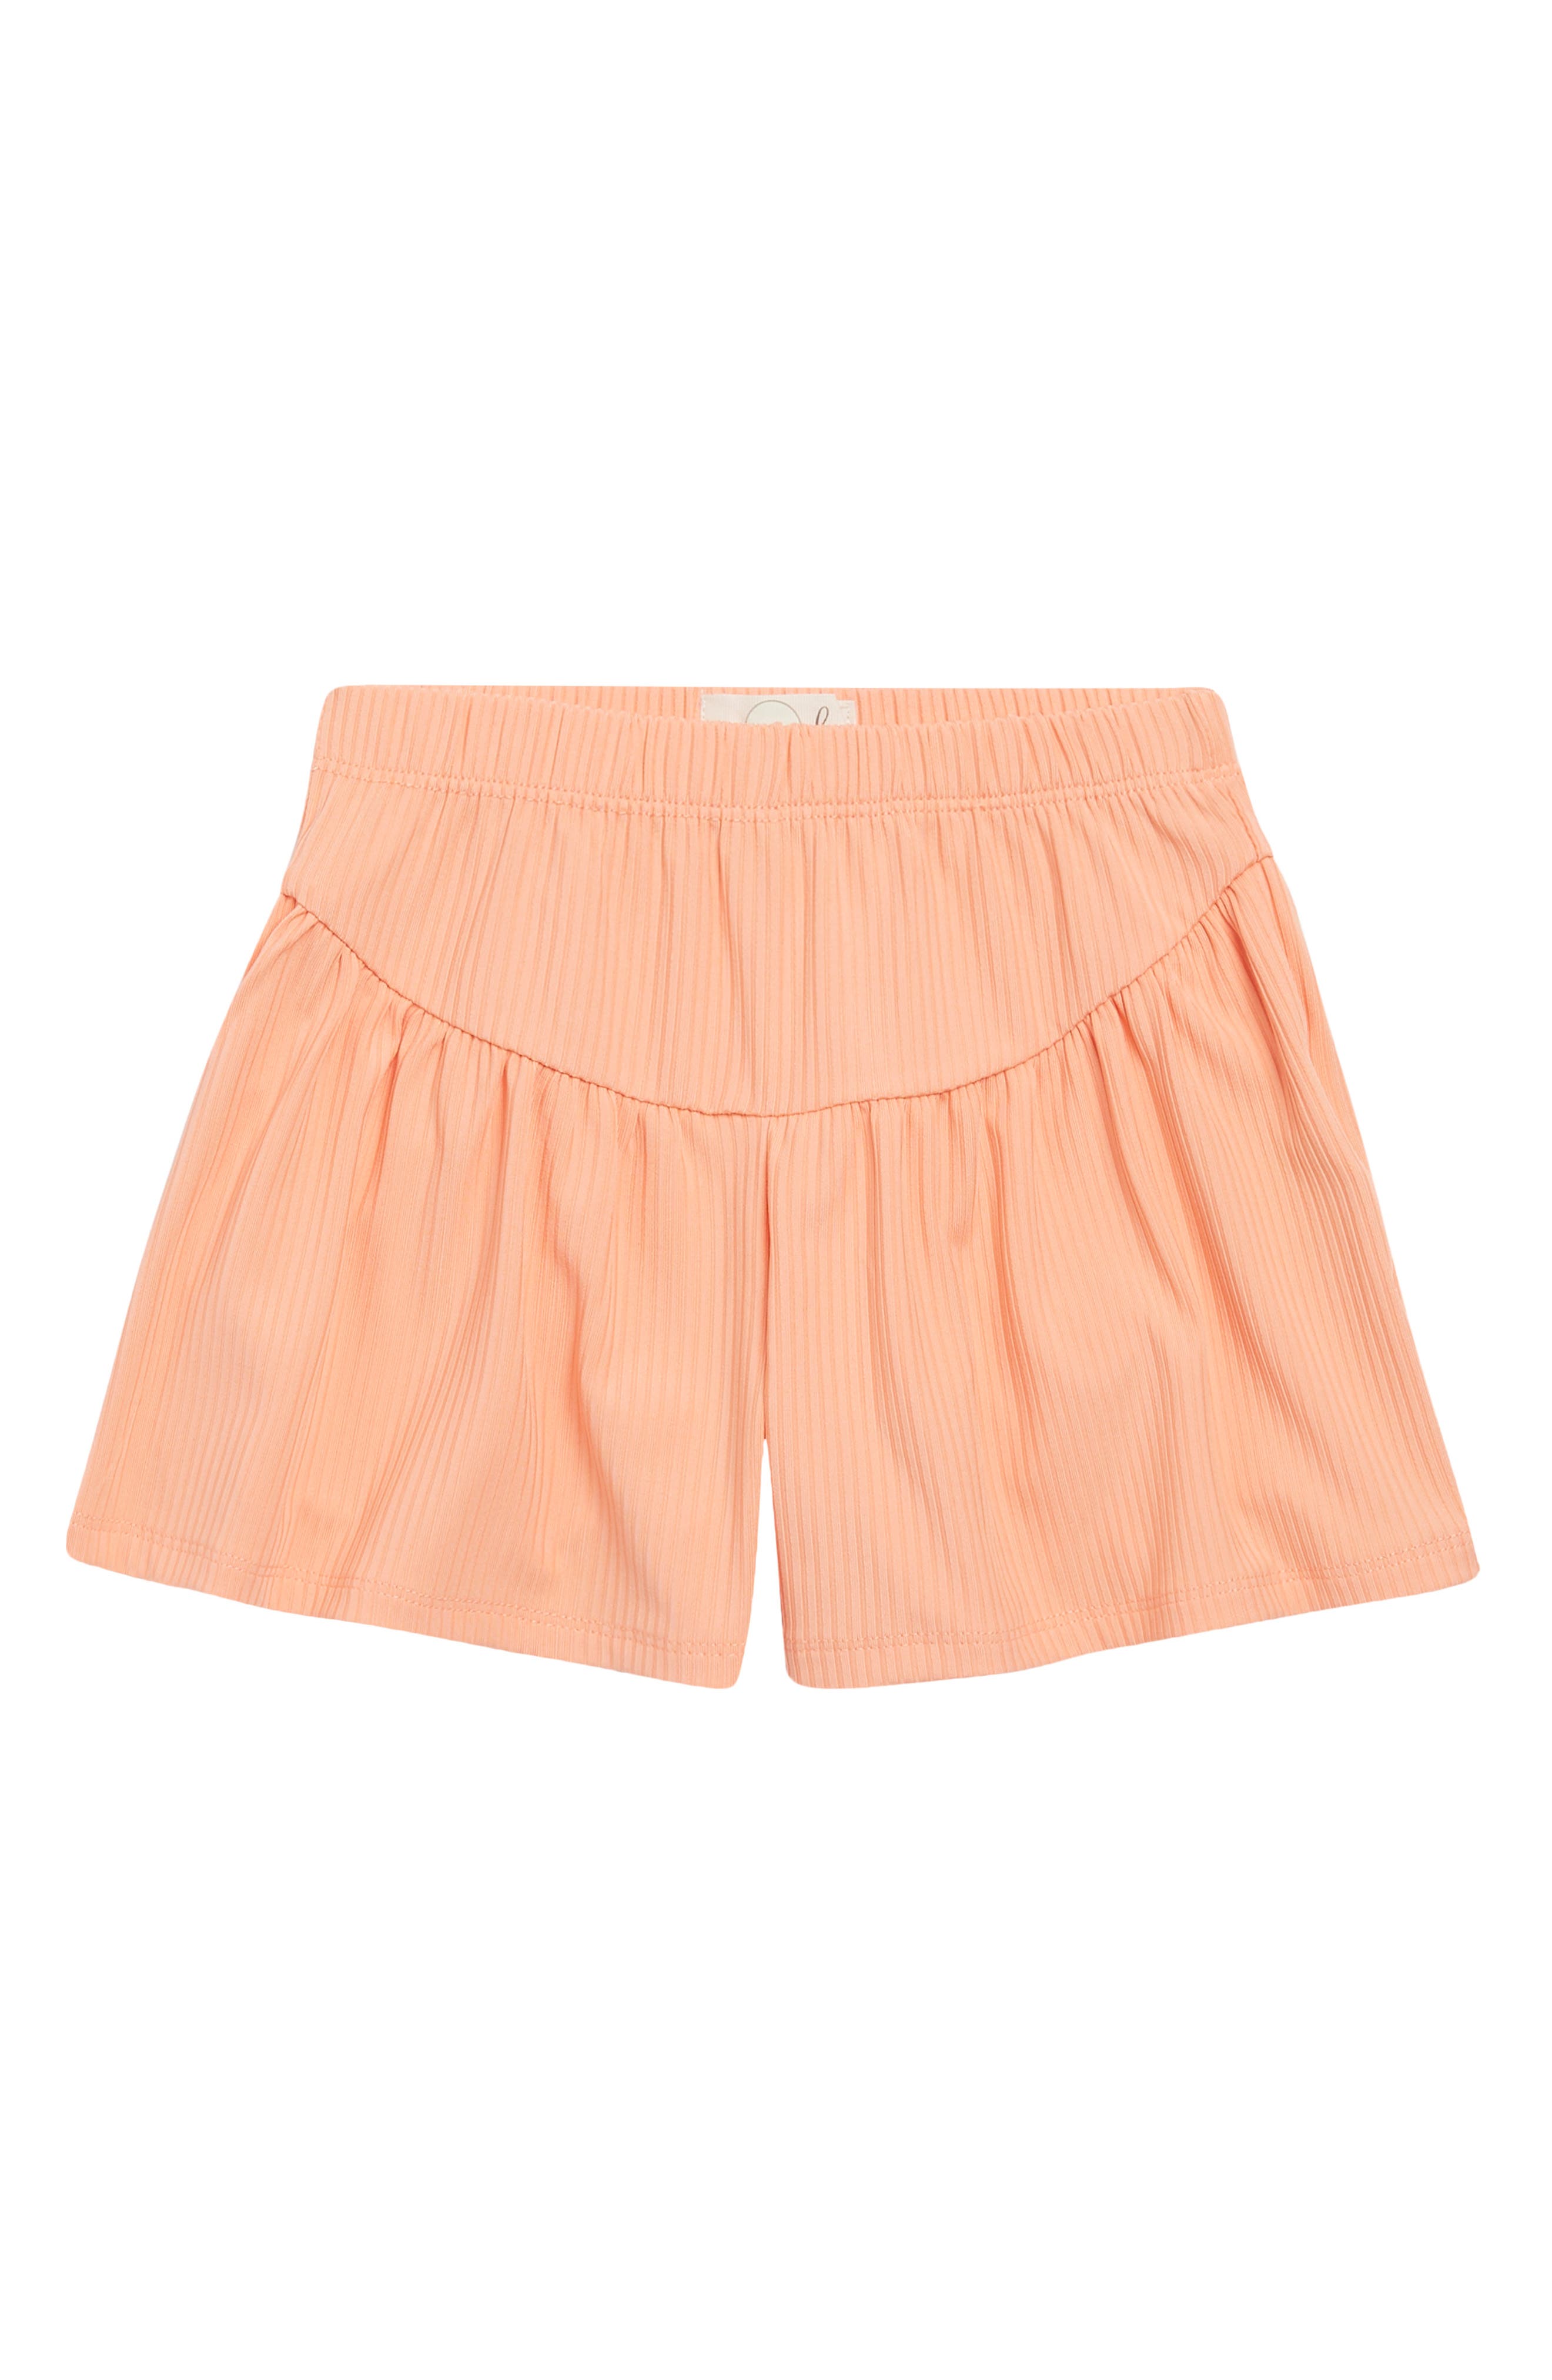 MAXamp;Co. Kids logo-embroidered cotton shorts - Orange